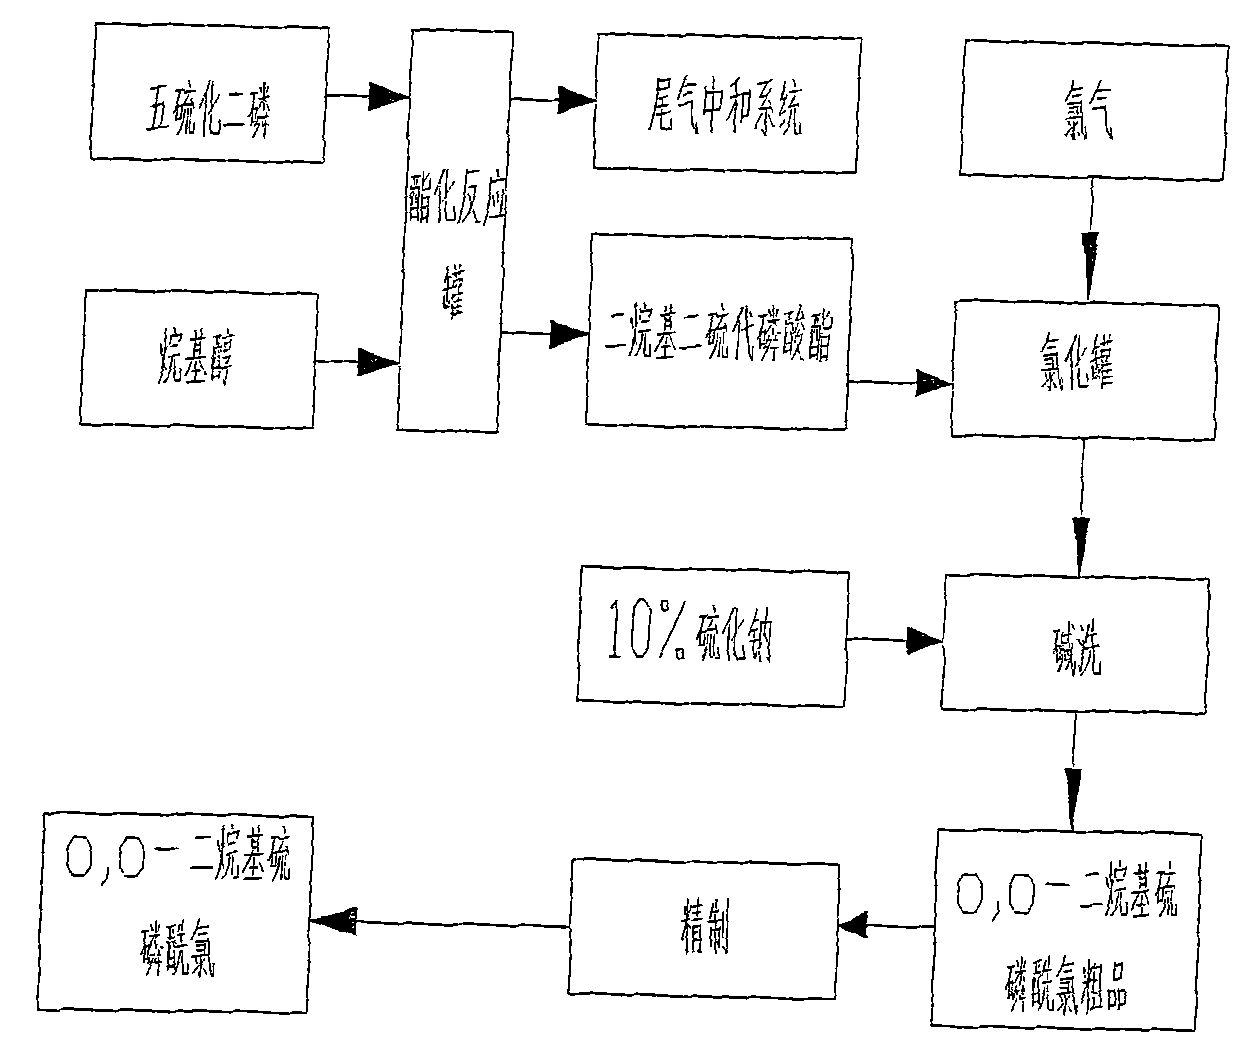 Production process of O, O-dialkyl thiophosphoryl chloride